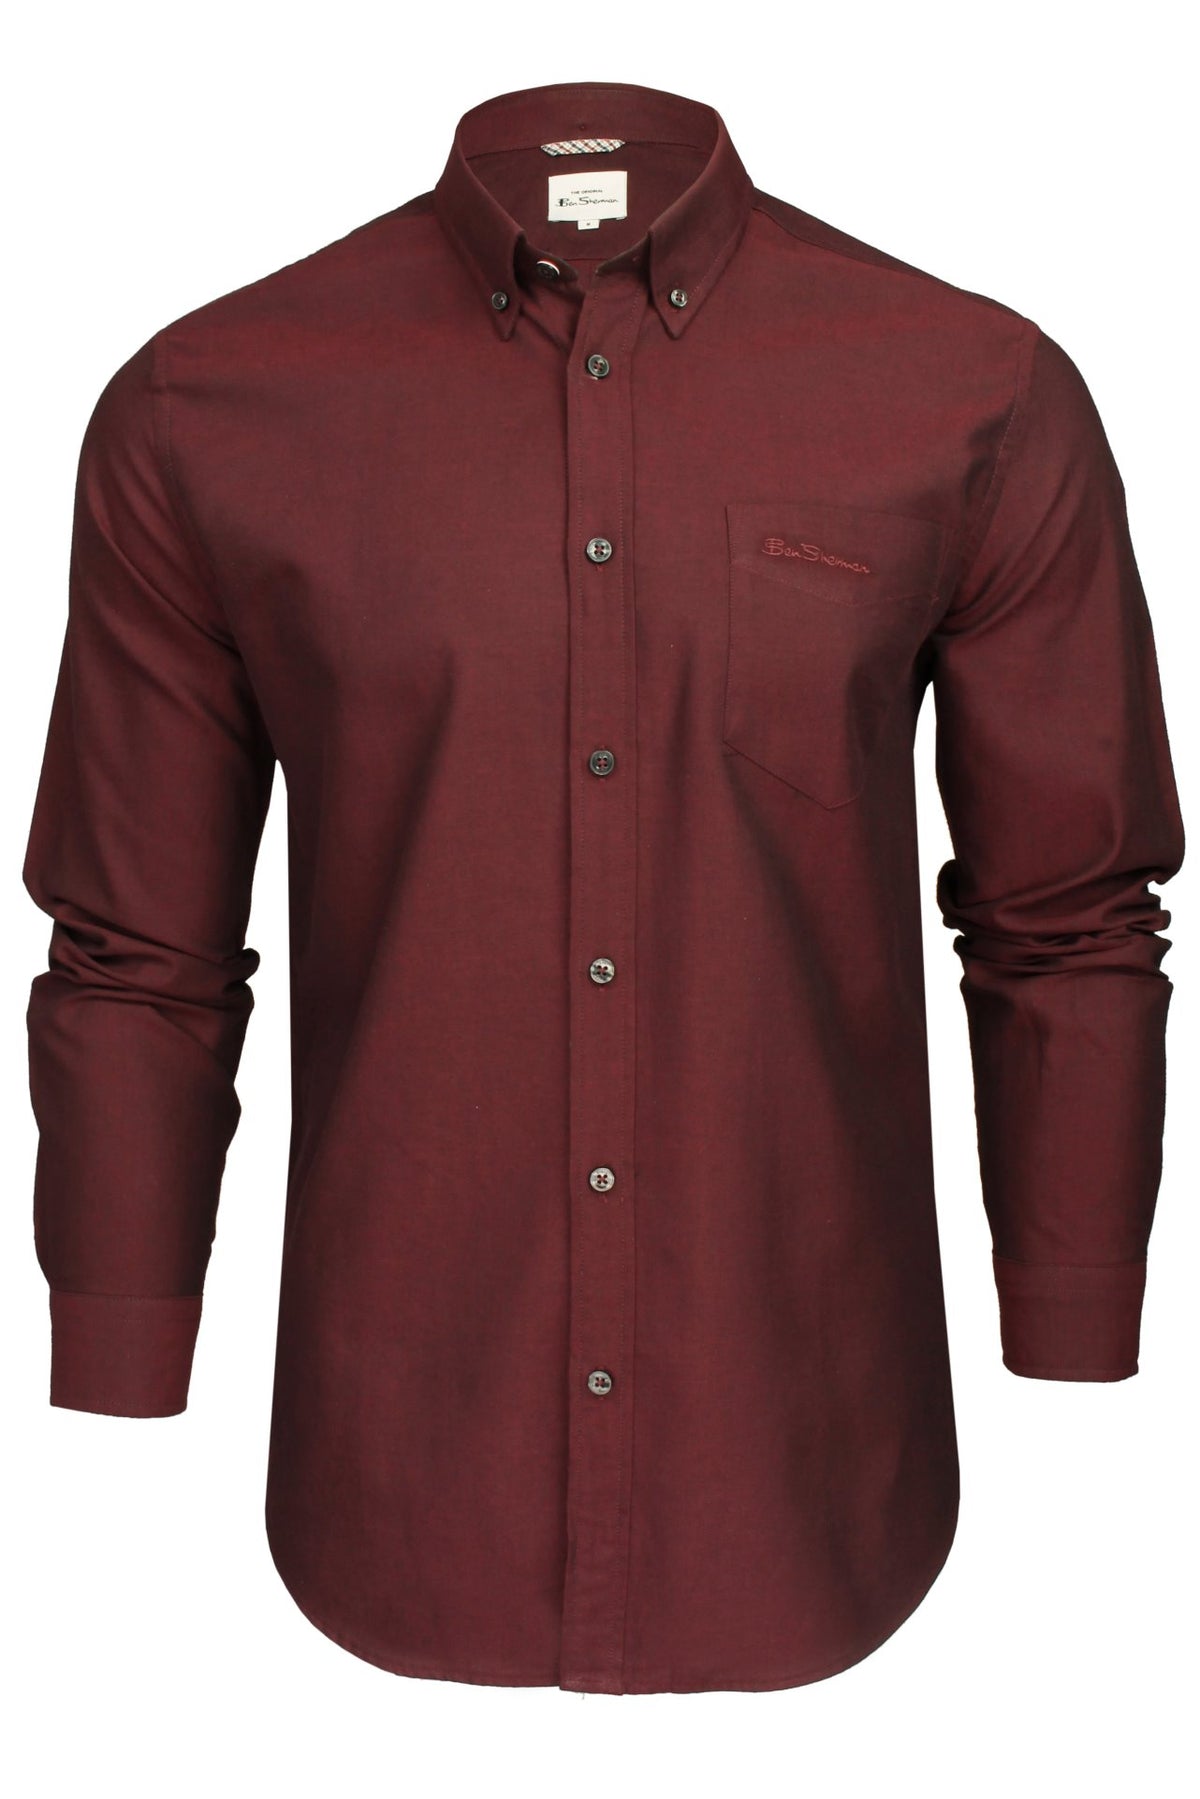 Ben Sherman Mens Oxford Shirt Long Sleeved (Embroidered Logo), 01, 48578, Wine (Embroidered Pocket Logo)